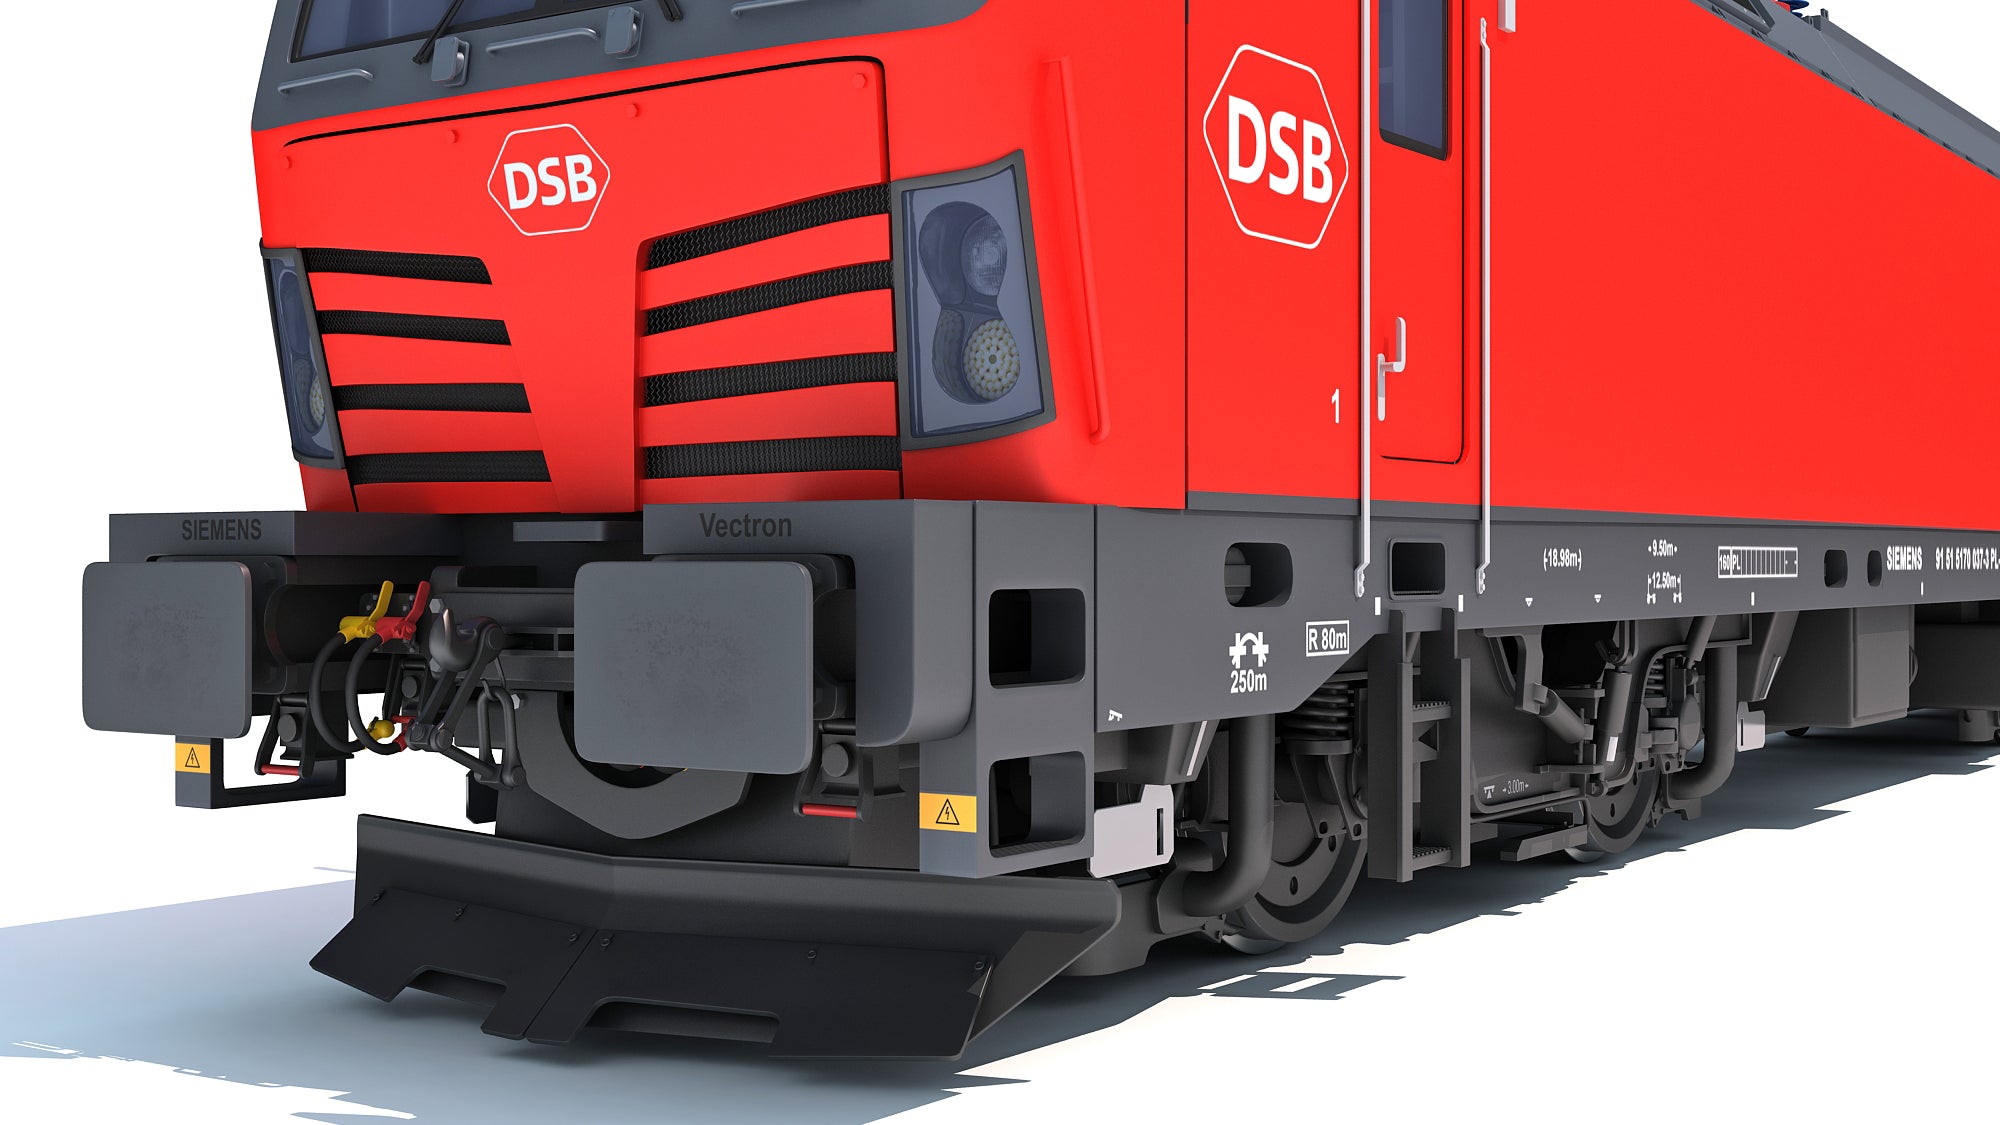 Siemens Vectron Danish Railways DSB